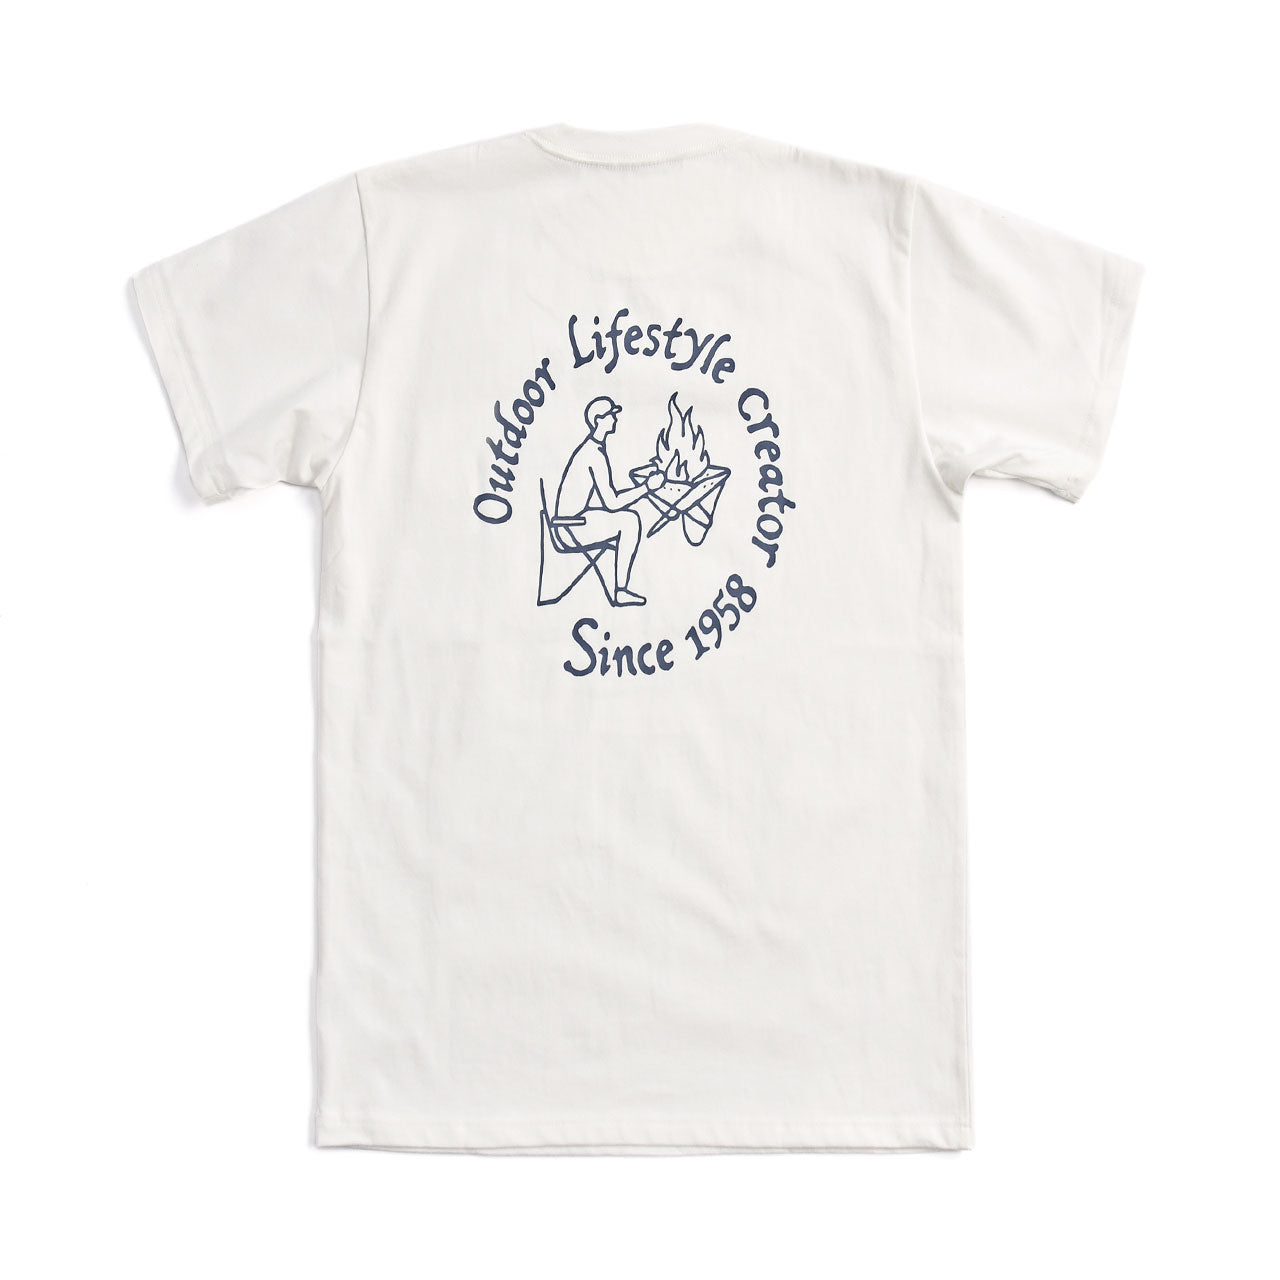 Snow Peak Camping Club T-Shirt